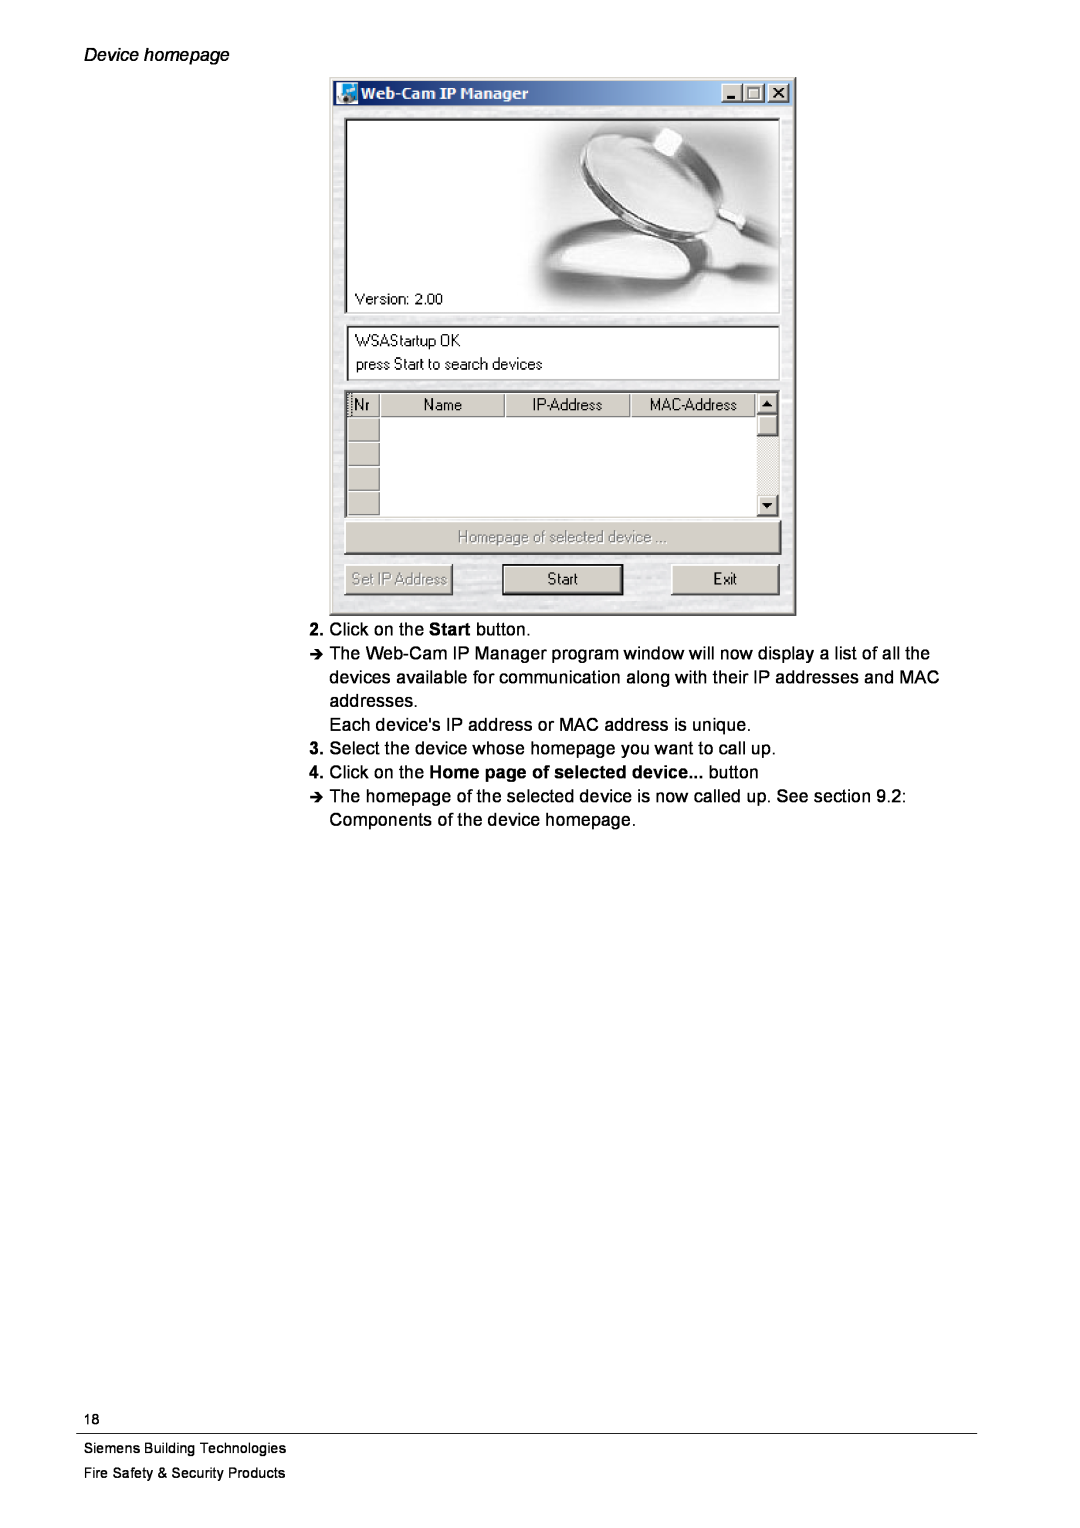 Siemens CFVA-IP user manual Click on the Start button 